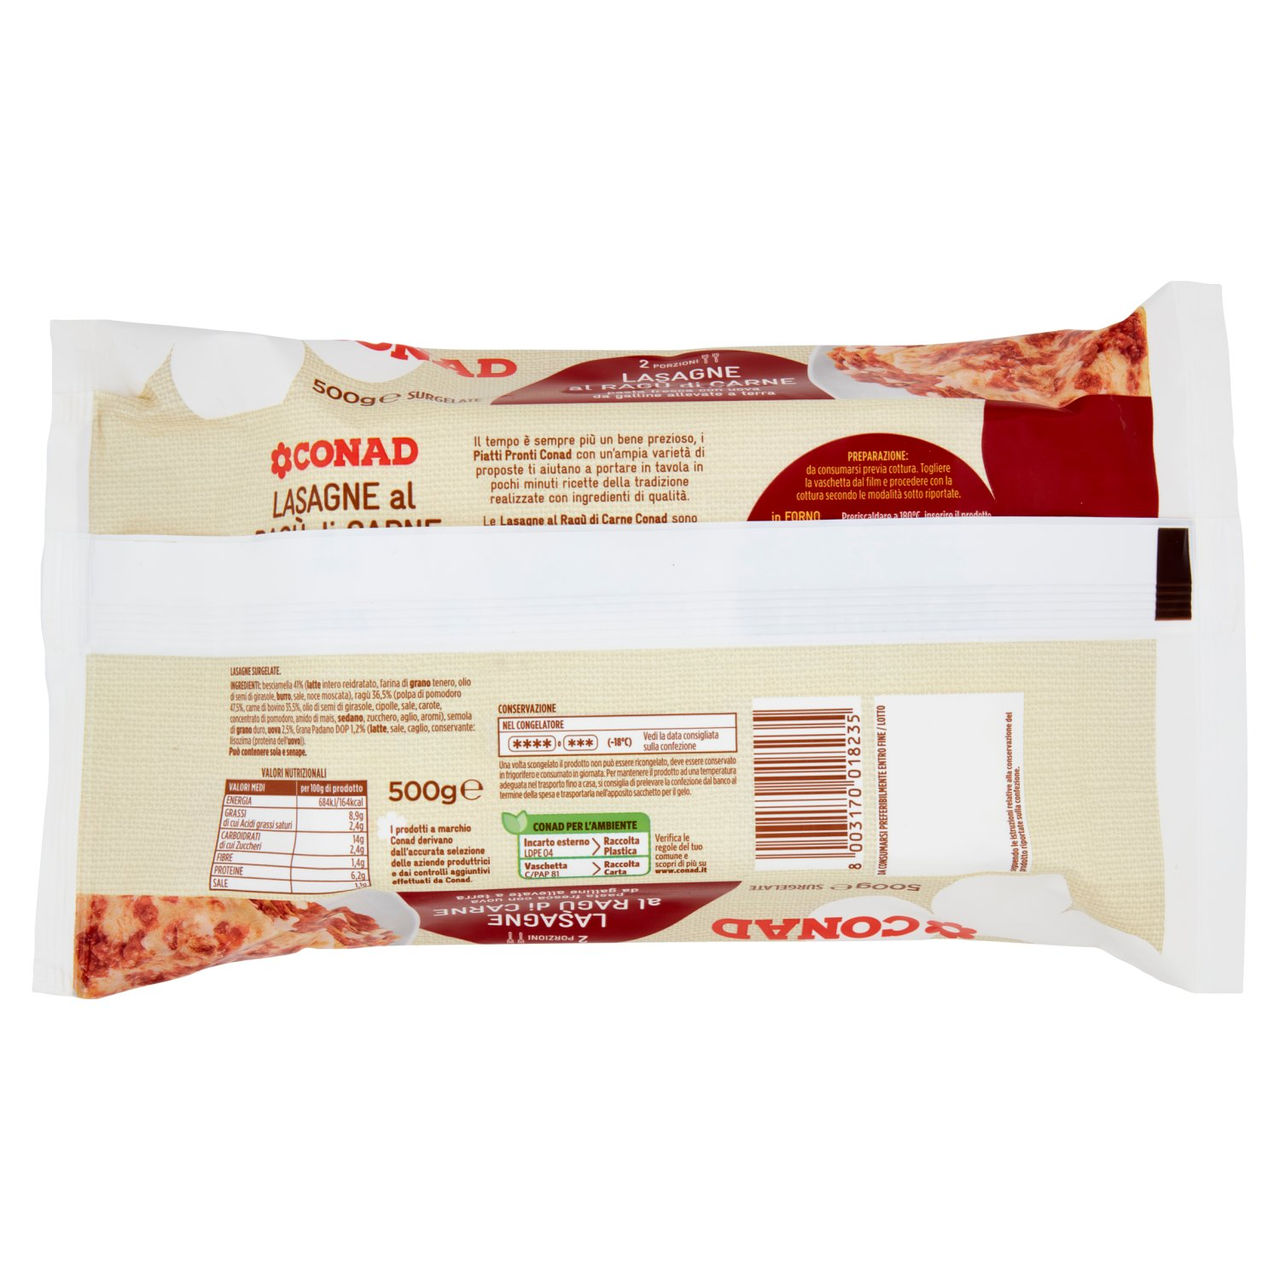 Lasagne al ragù di carne 500 g Conad online